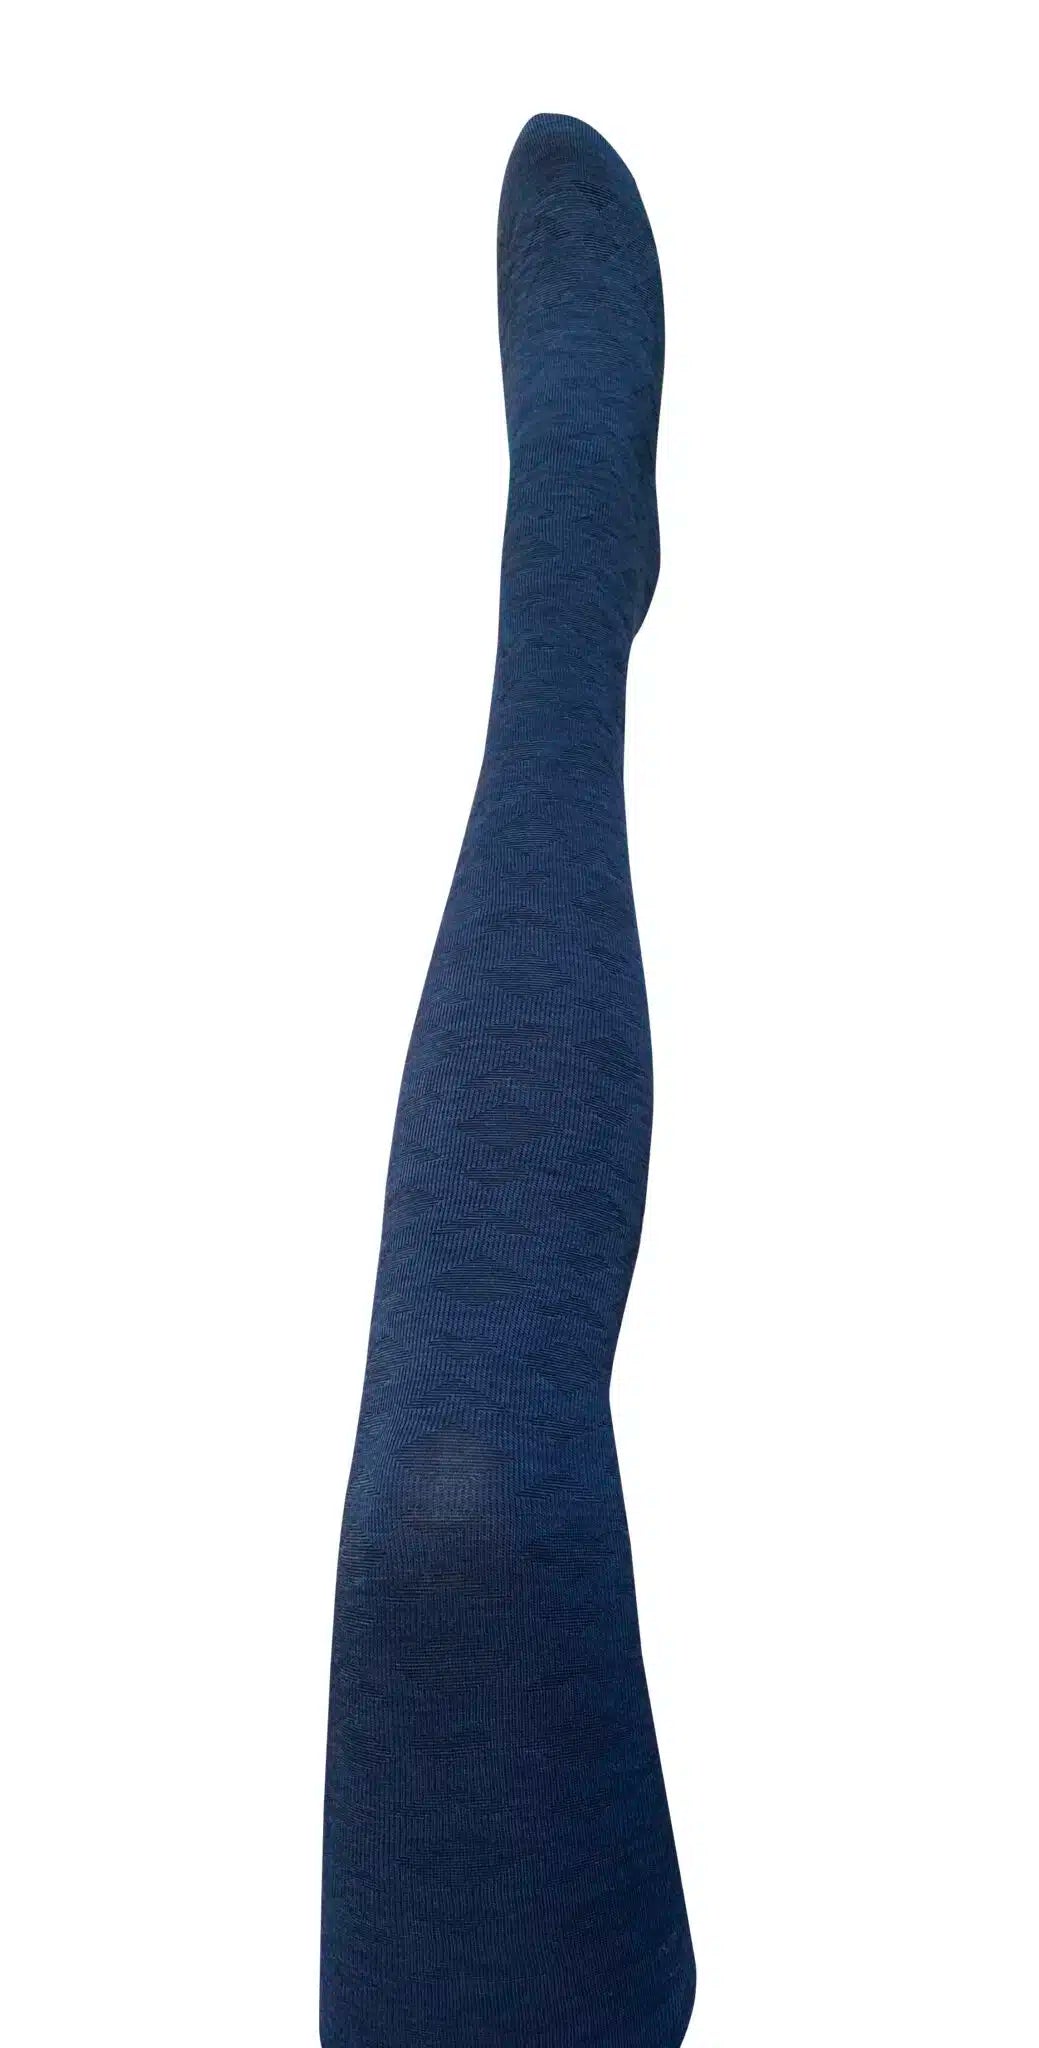 ‘Deco’ Merino Wool Tights - Tightology Tights Tightology Navy Blue Small/Medium 